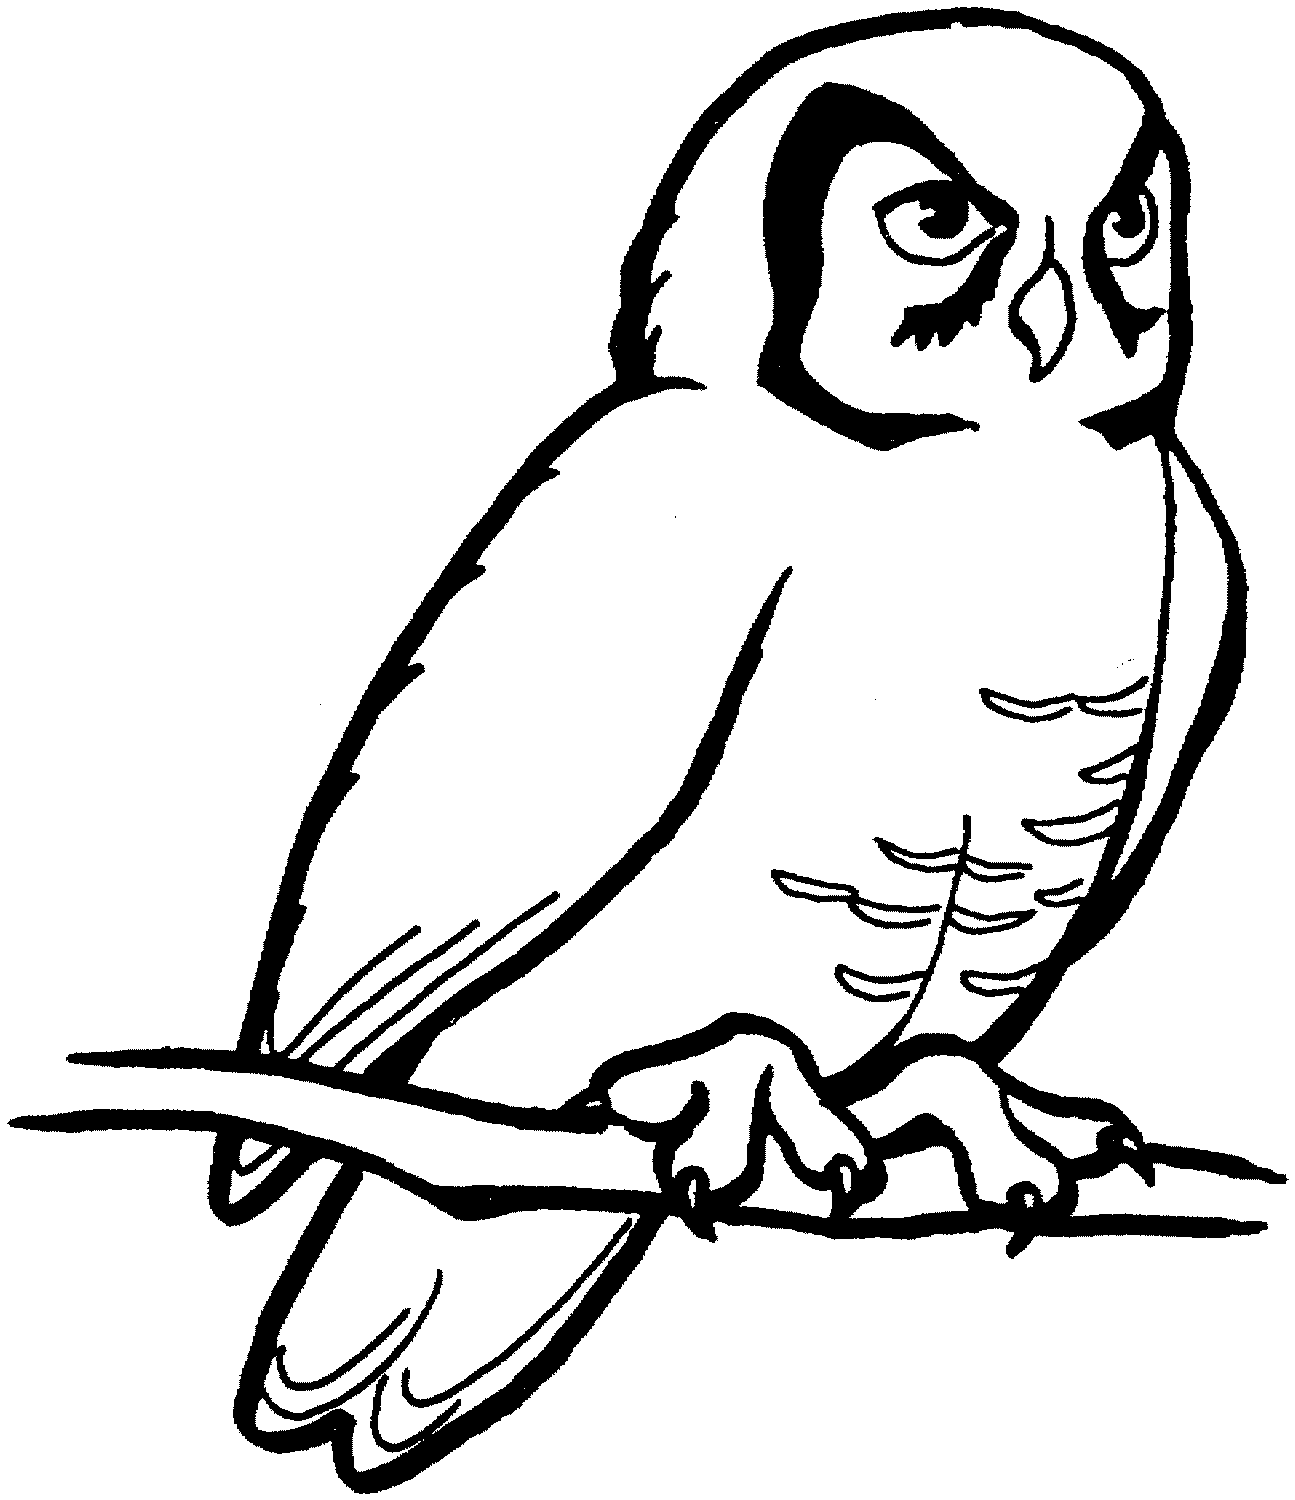 Owl Clipart Black And White C - Owl Clip Art Black And White